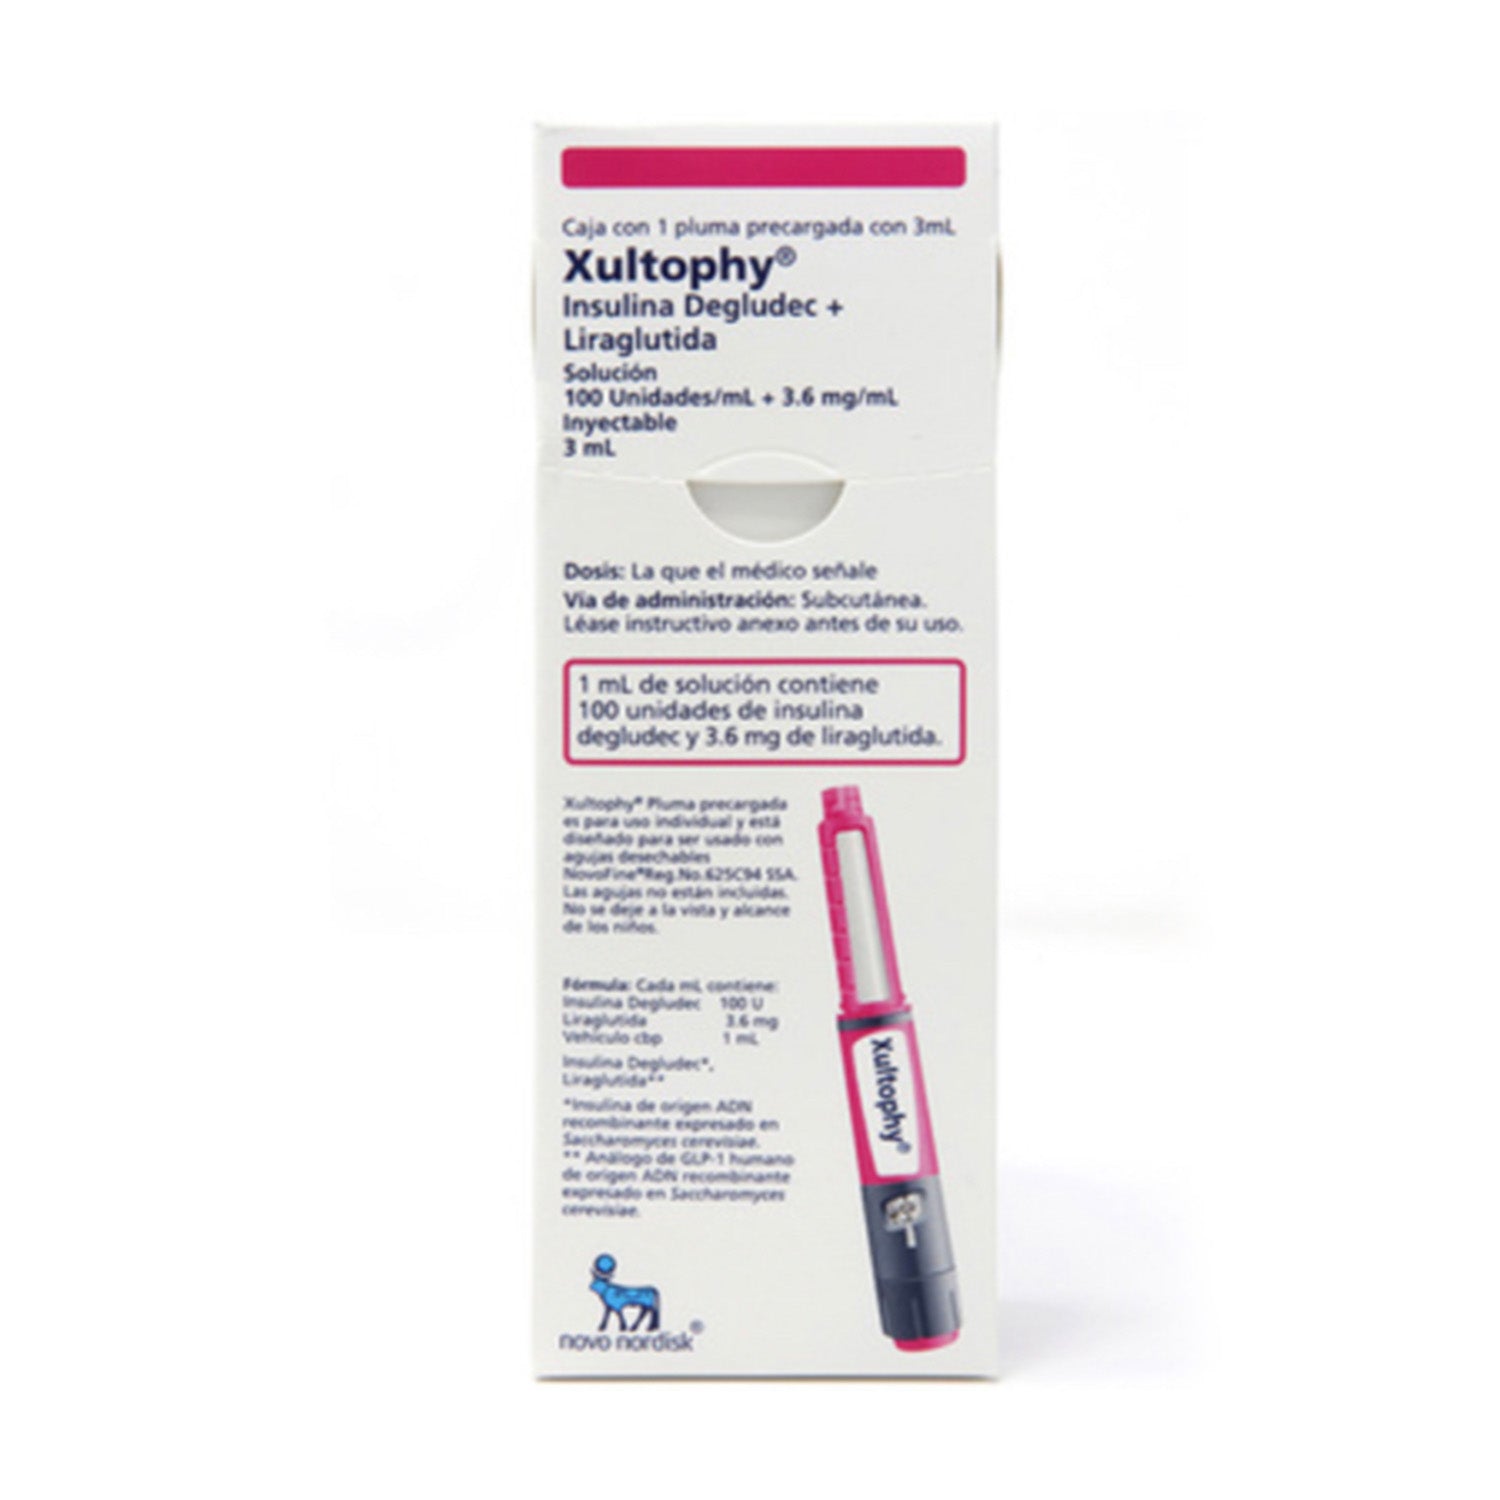 Caja con 1 pluma precargada con 3 mL, insulina degludec + liraglutida, marca Xultophy®, 100 Unidades/mL + 3.6 mg/mL